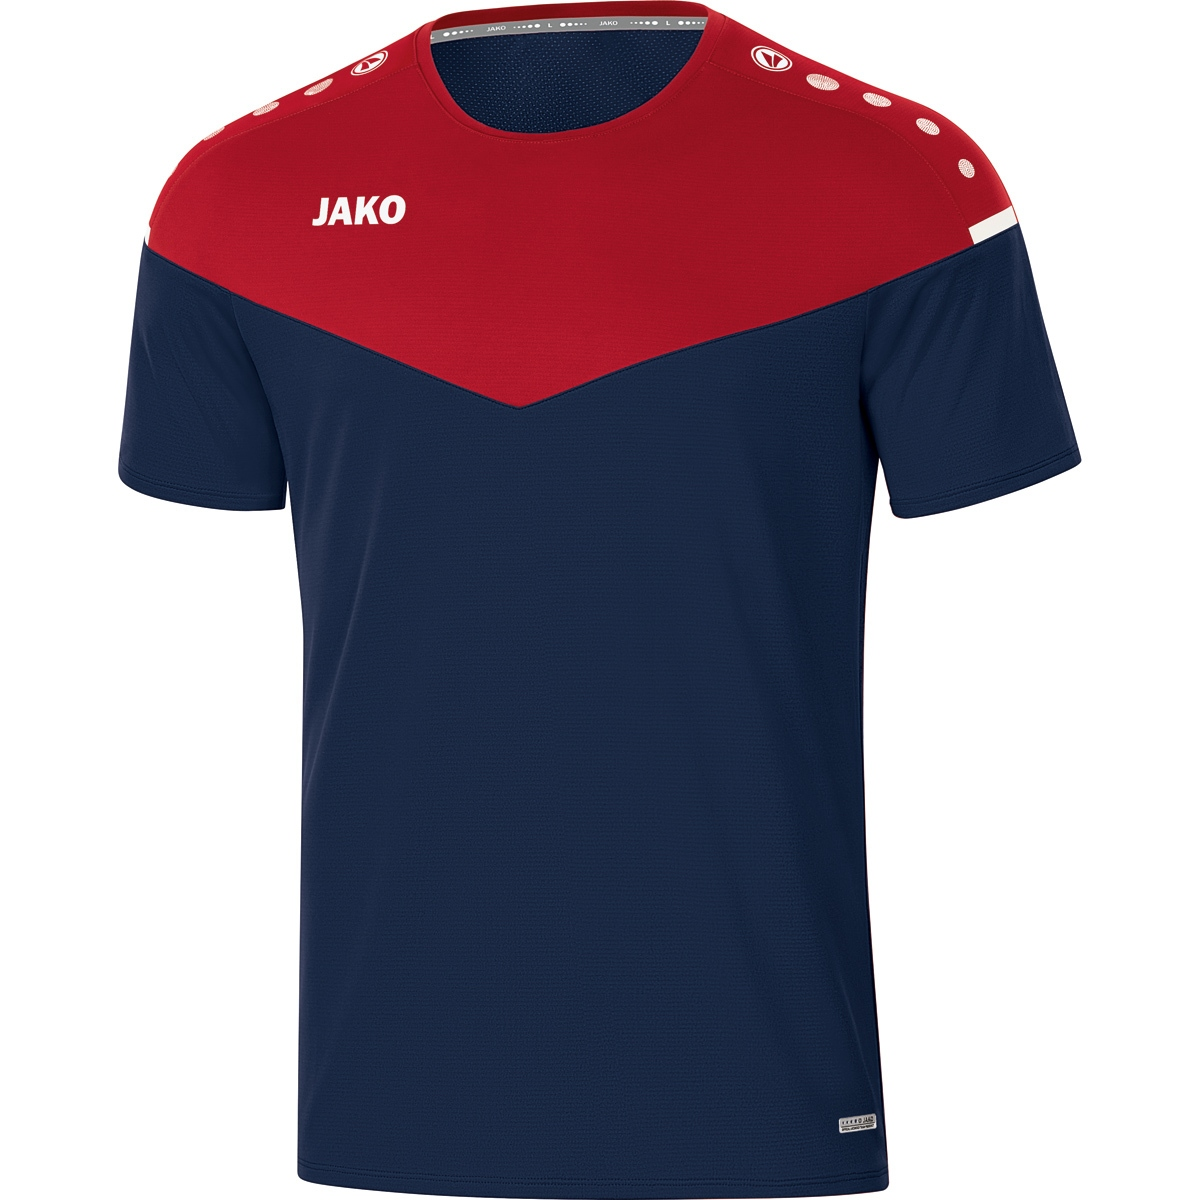 Champ JAKO 140, T-Shirt 6120 rot, 2.0 Kinder, Gr. marine/chili